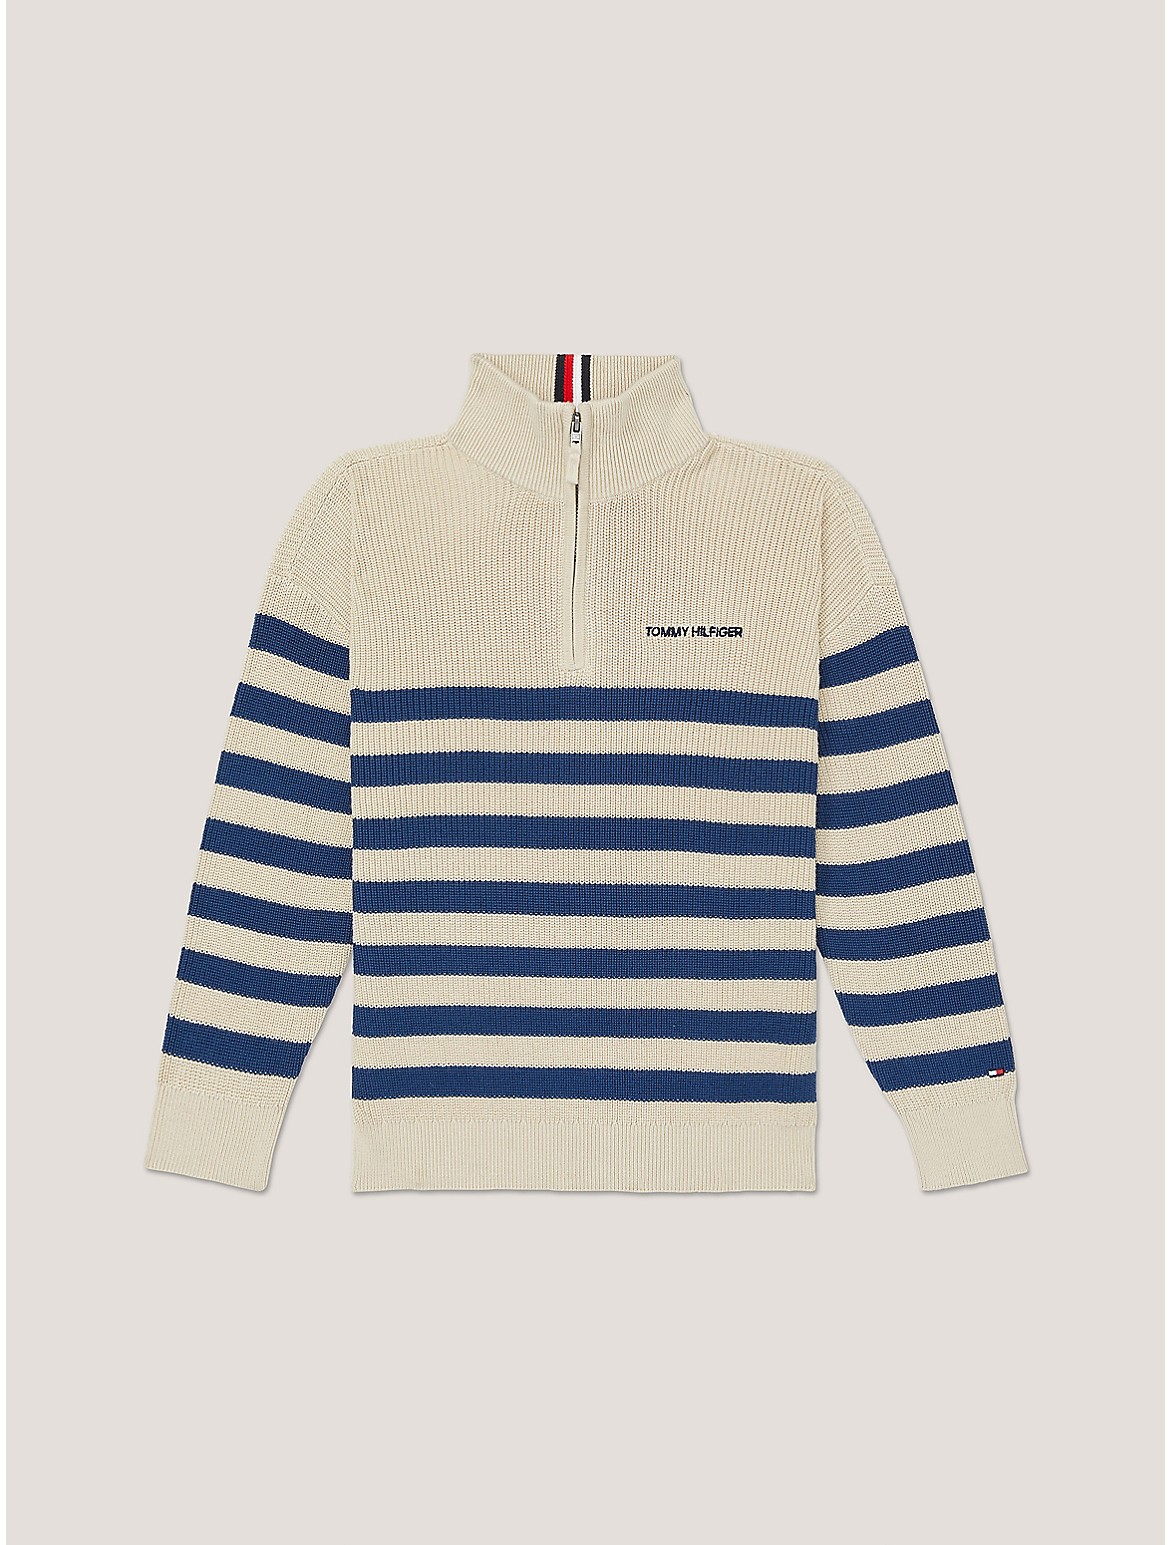 Tommy Hilfiger Boys' Kids' Stripe Mockneck Sweater